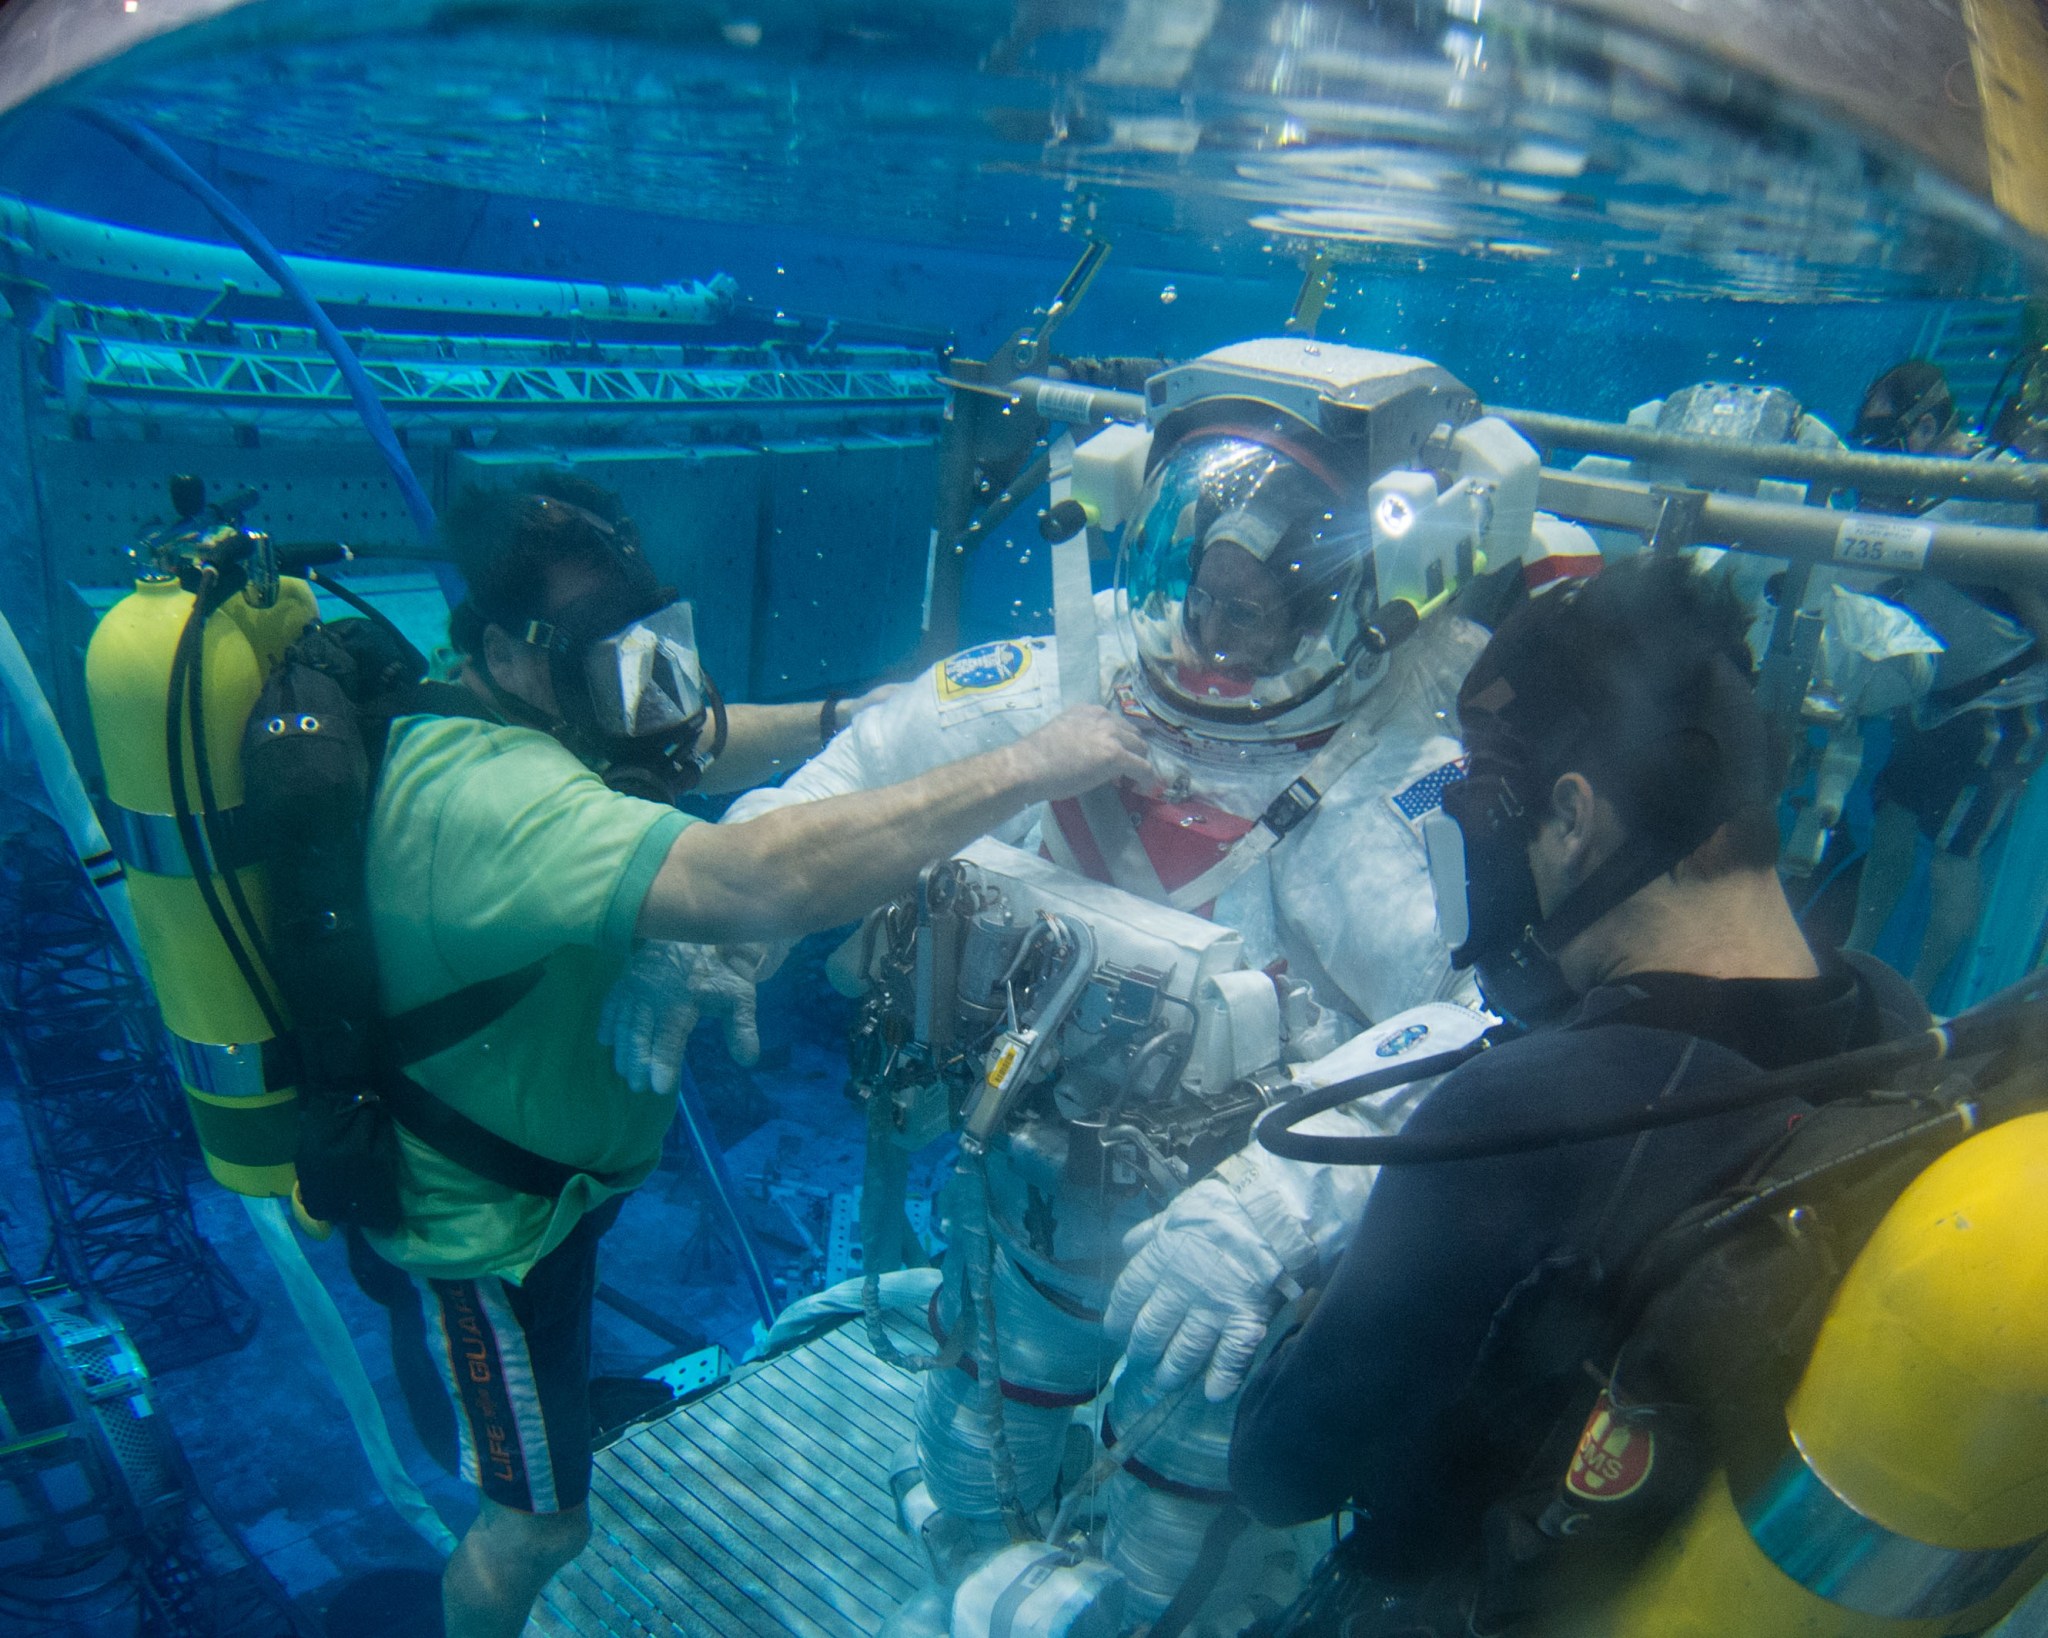 NASA Astronaut Barry WIlmore training in NB: